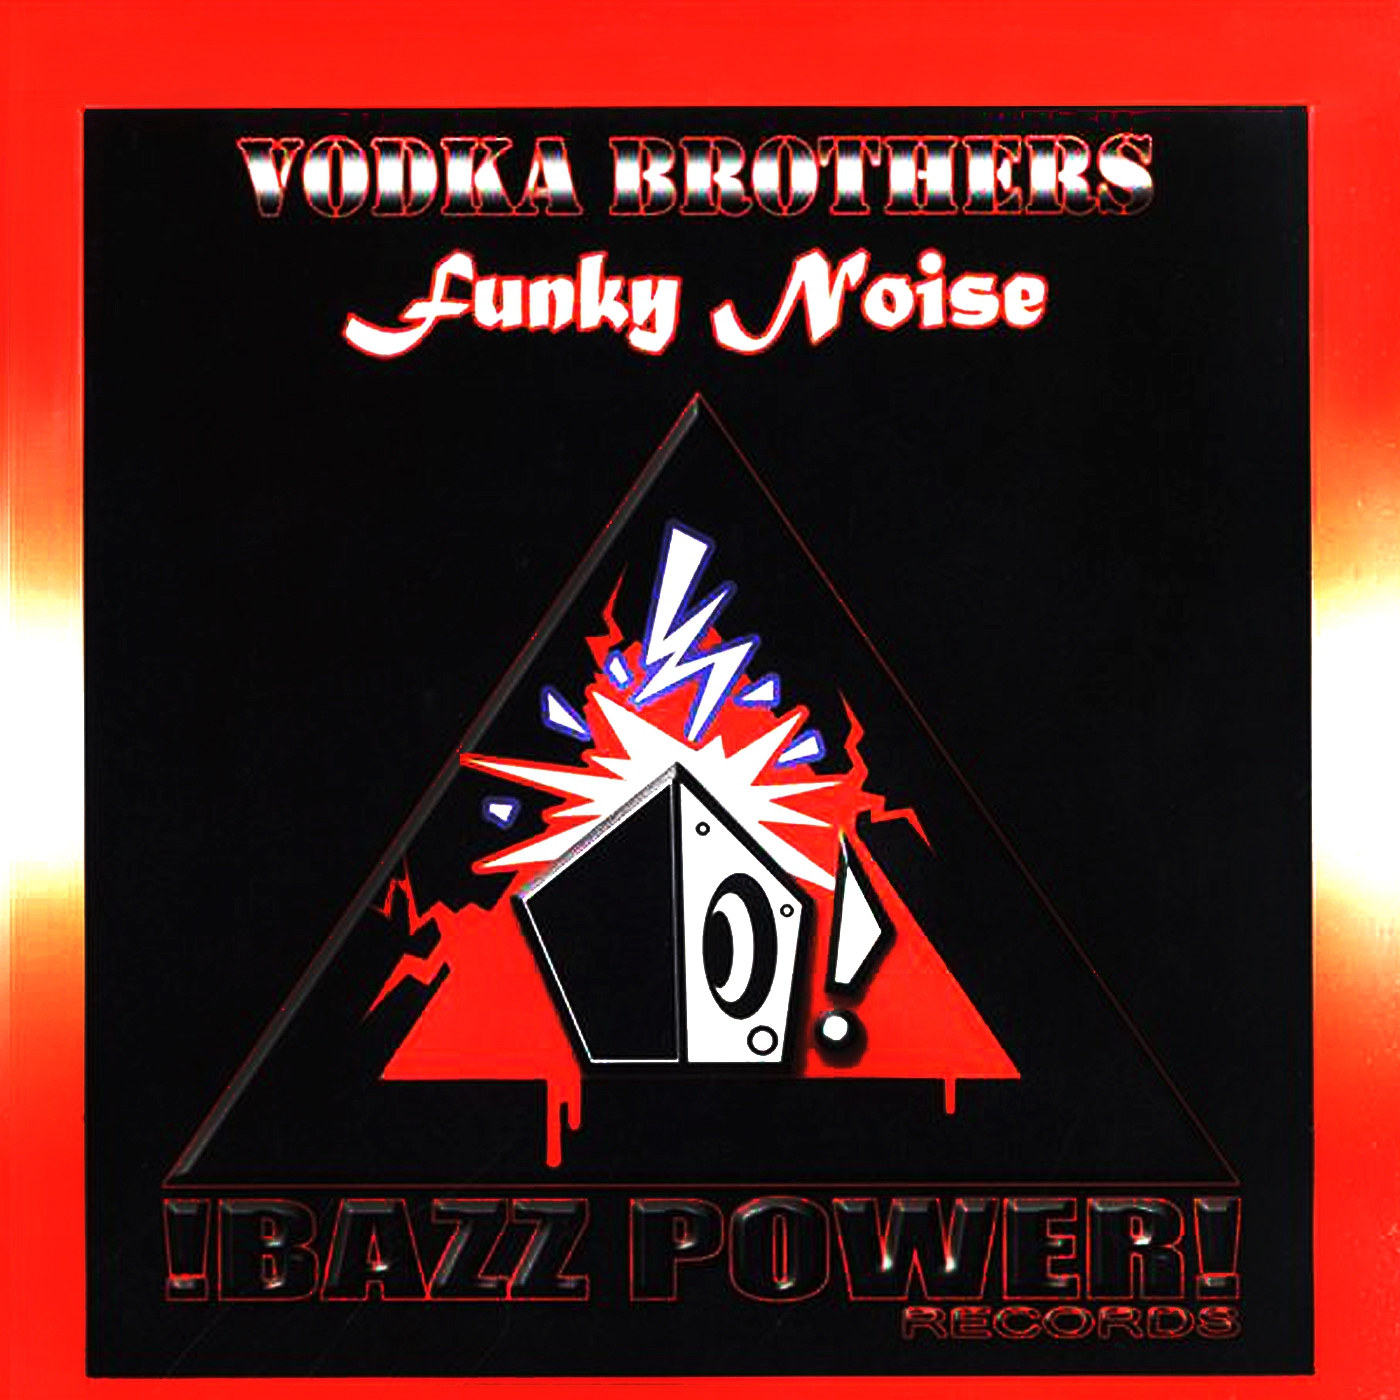 Vodka Brothers - Funky noise (BAZZPOWER001) Vinyl - Rigeshop